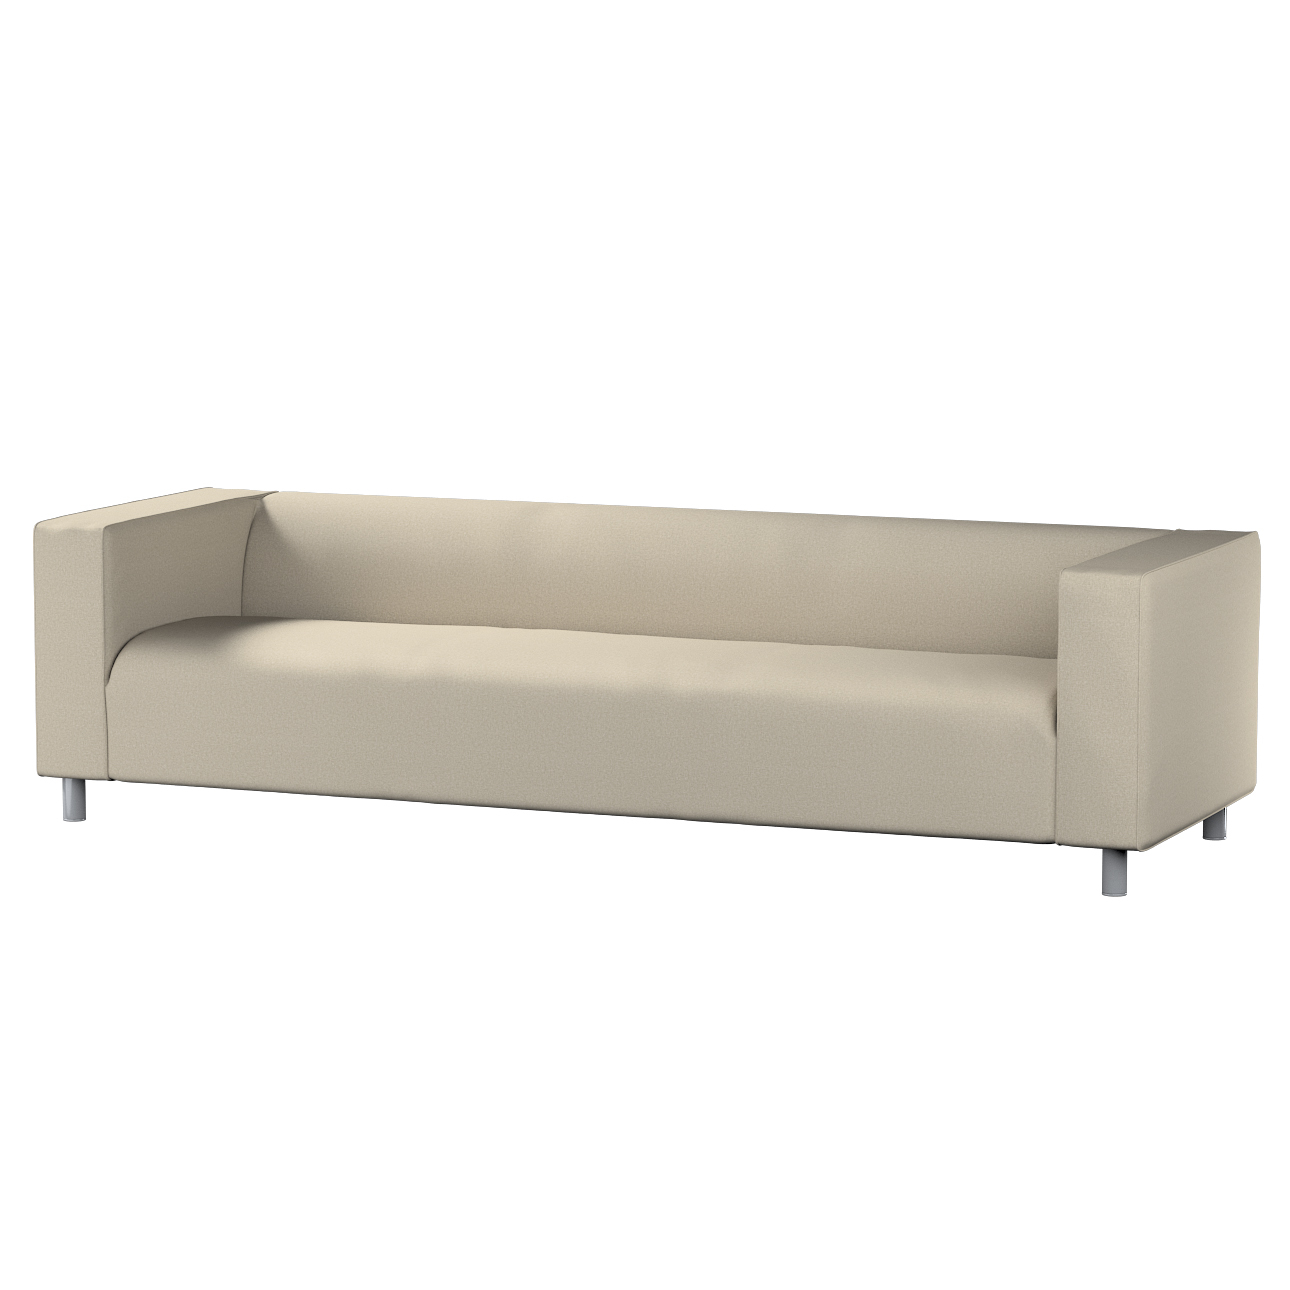 Bezug für Klippan 4-Sitzer Sofa, grau-beige, Bezug für Klippan 4-Sitzer, Am günstig online kaufen